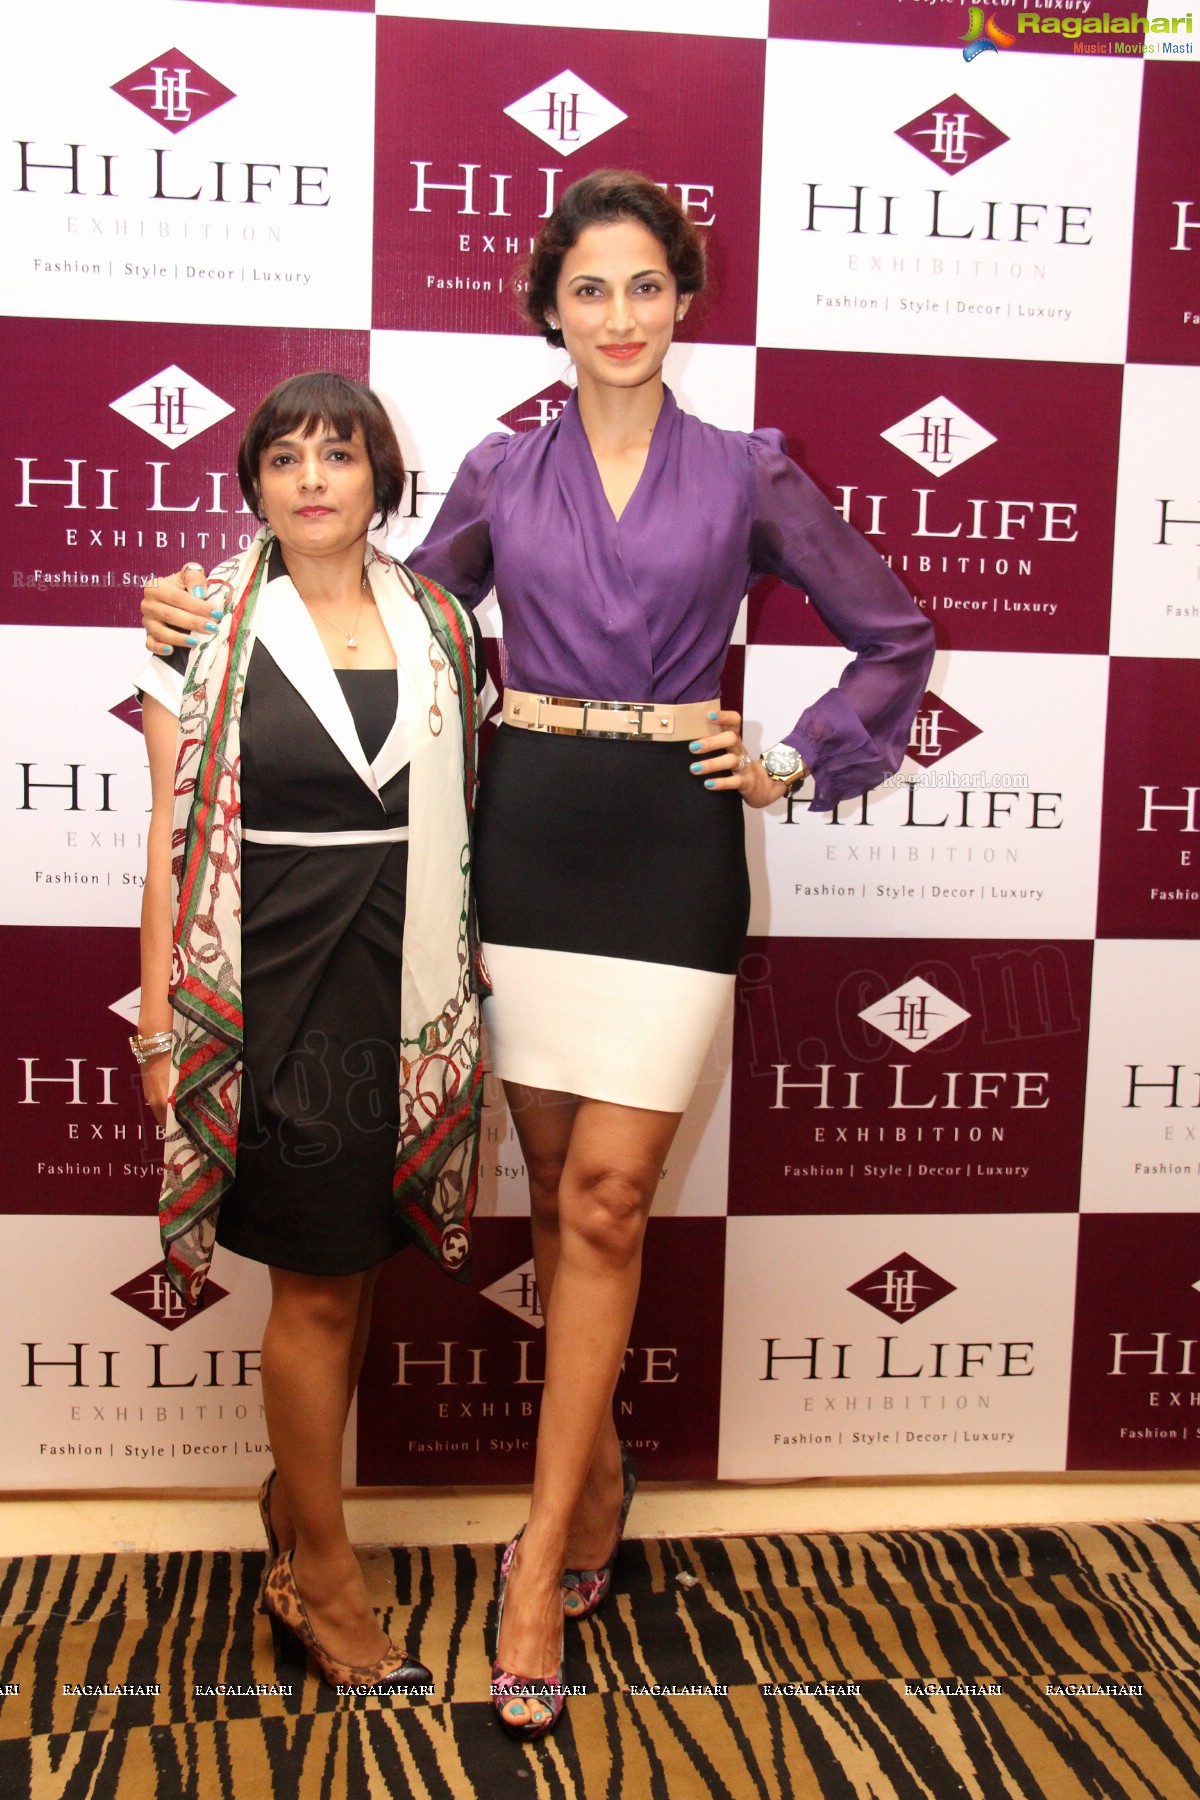 Hi Life Exhibition Launch, Hyderabad